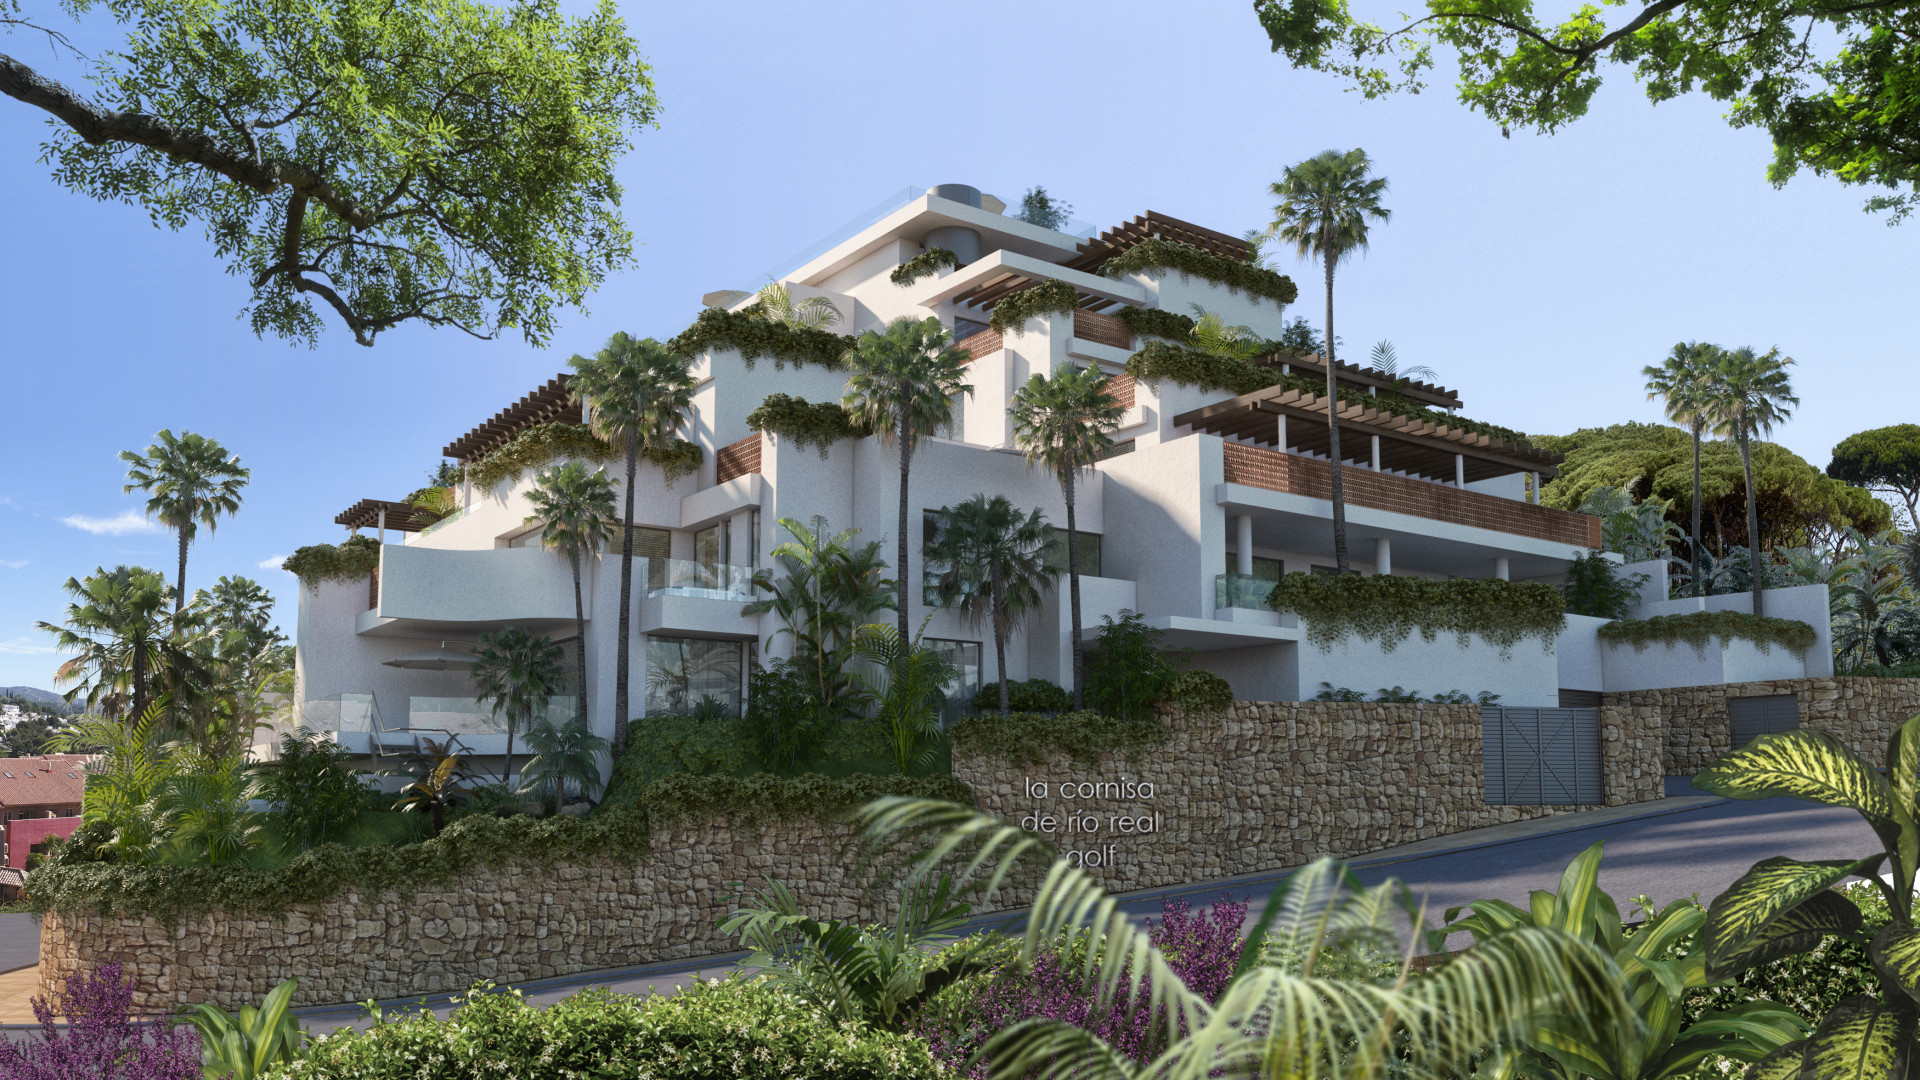 La Cornisa de Río Real Golf: Exclusive residential project in Marbella East, Río Real Golf. | Image 16